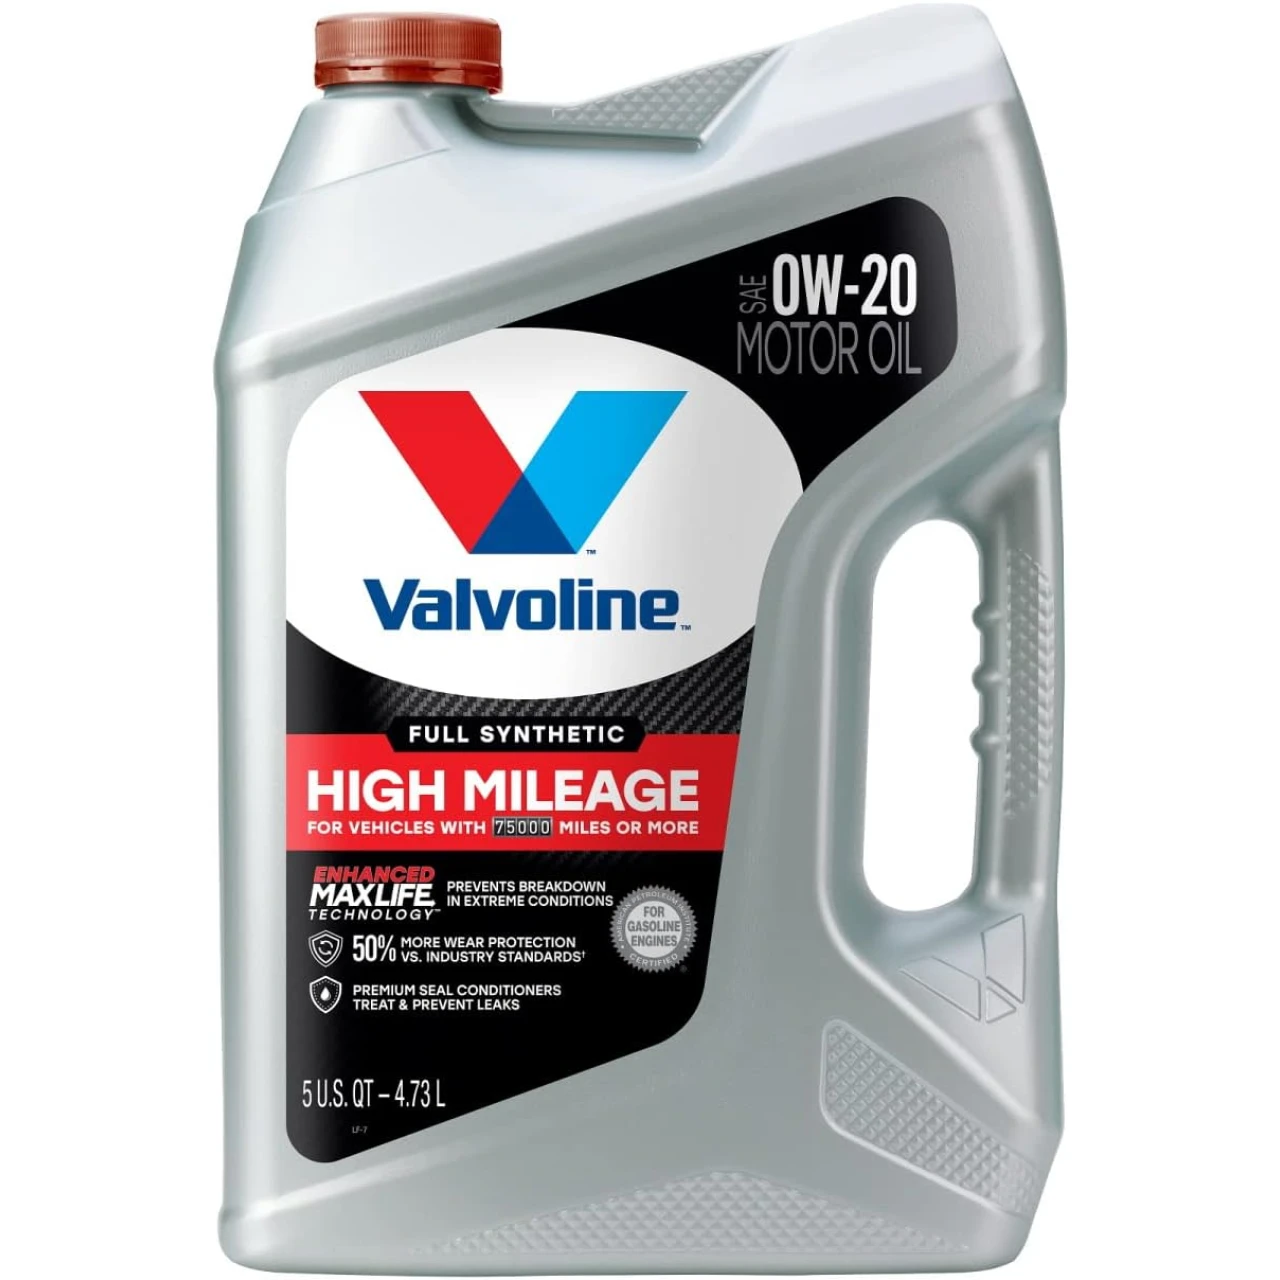 Valvoline™ Full Synthetic High Mileage Motor Oil